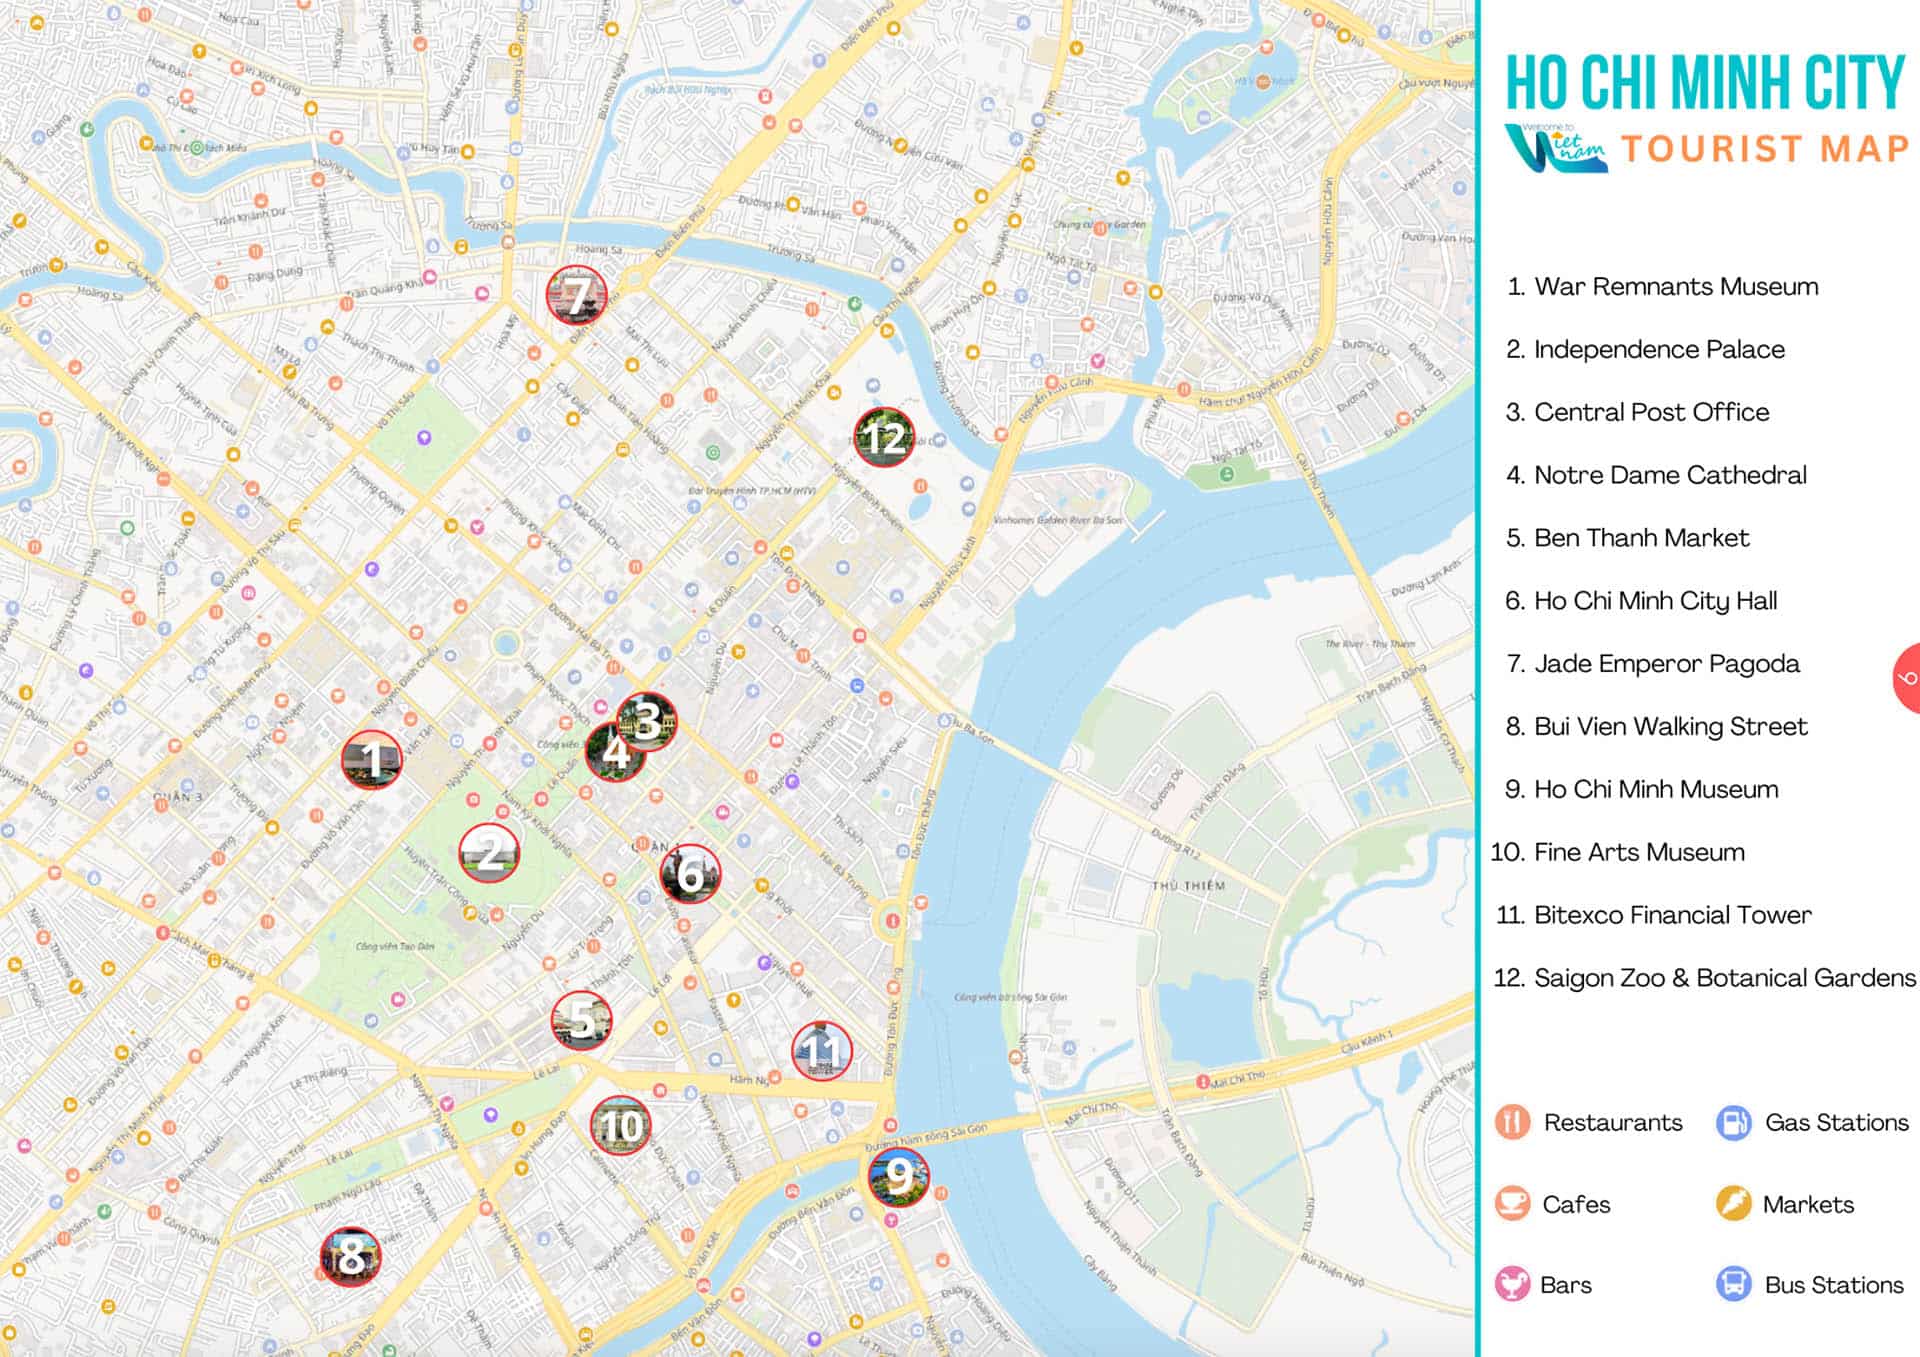 Ho Chi Minh City Tourist Map